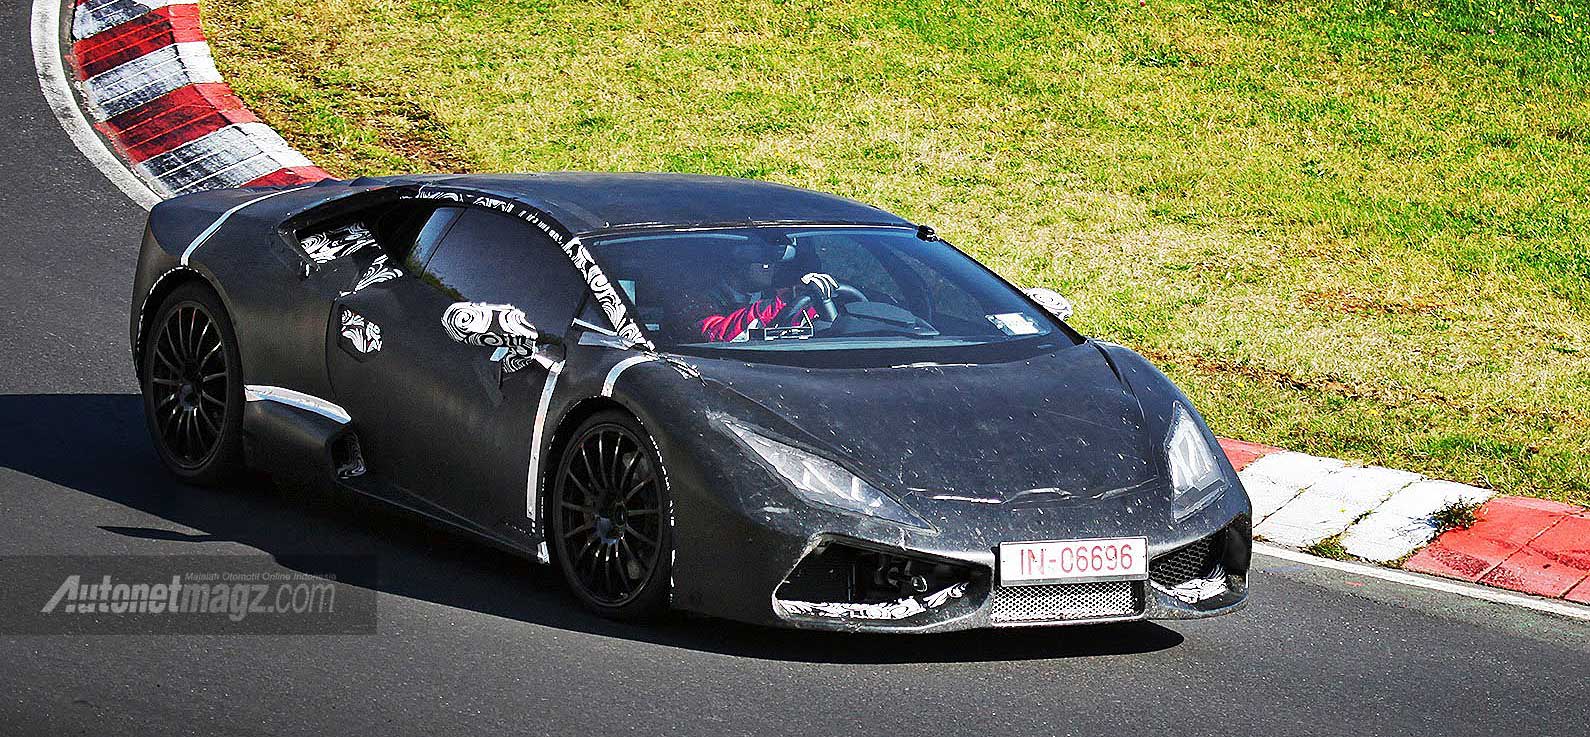 International, Spy shots Lamborghini Cabrera di sirkuit Nürburgring: HOT : Inikah Bentuk Lamborghini Cabrera?